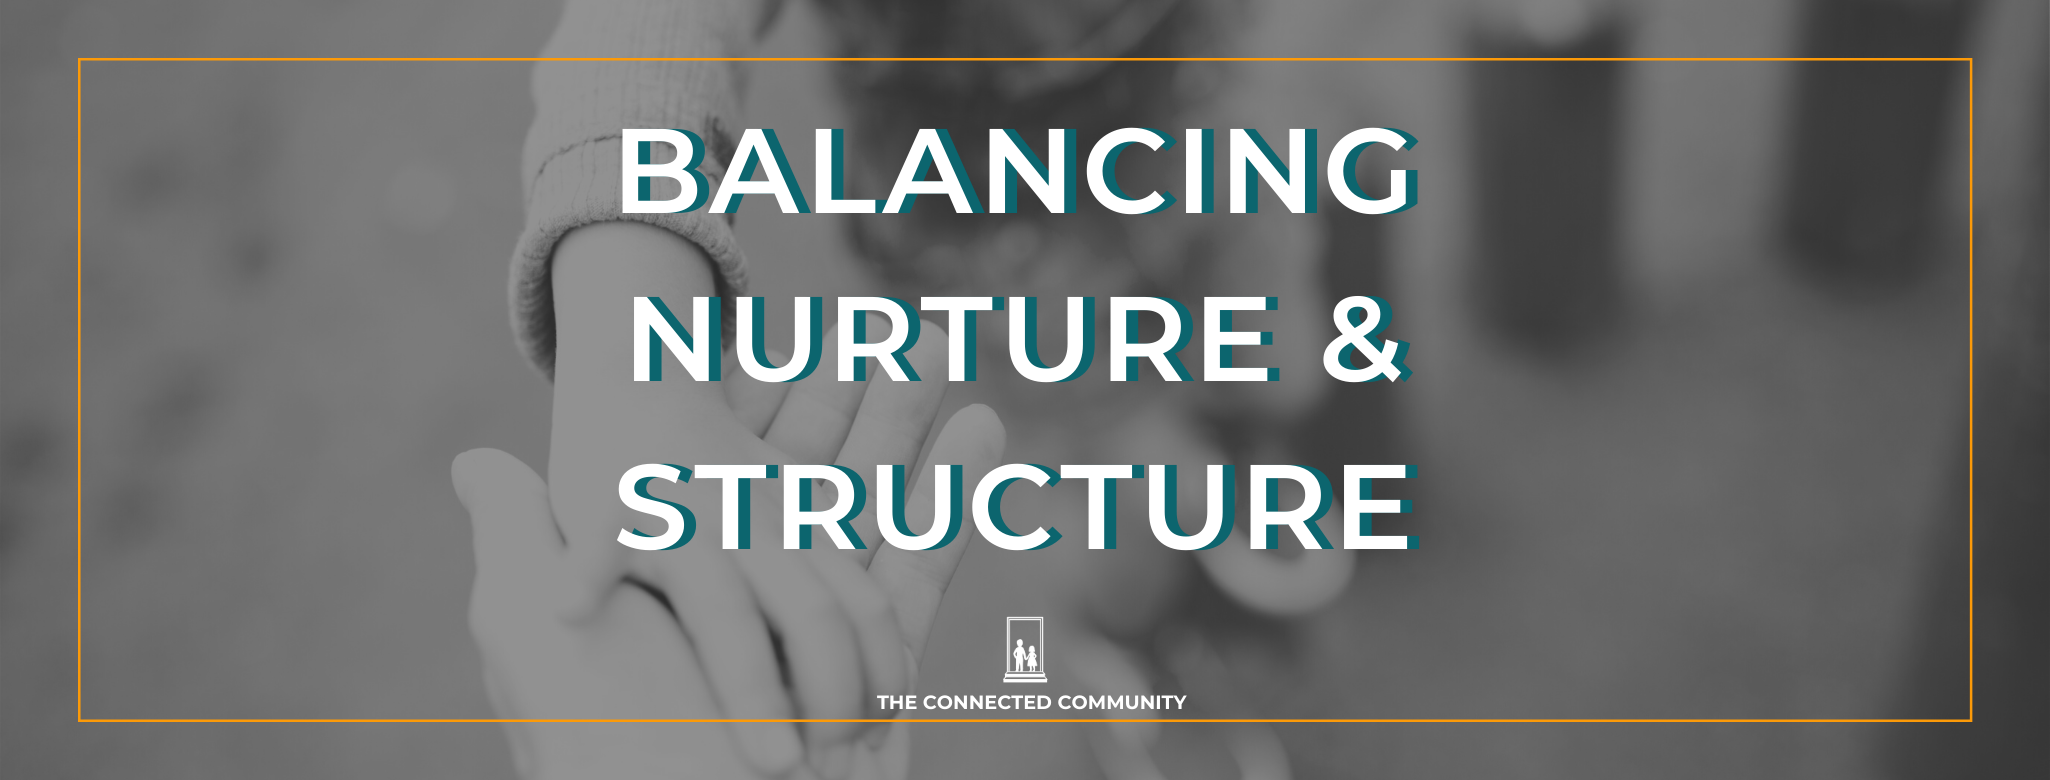 balancing structure and nurture